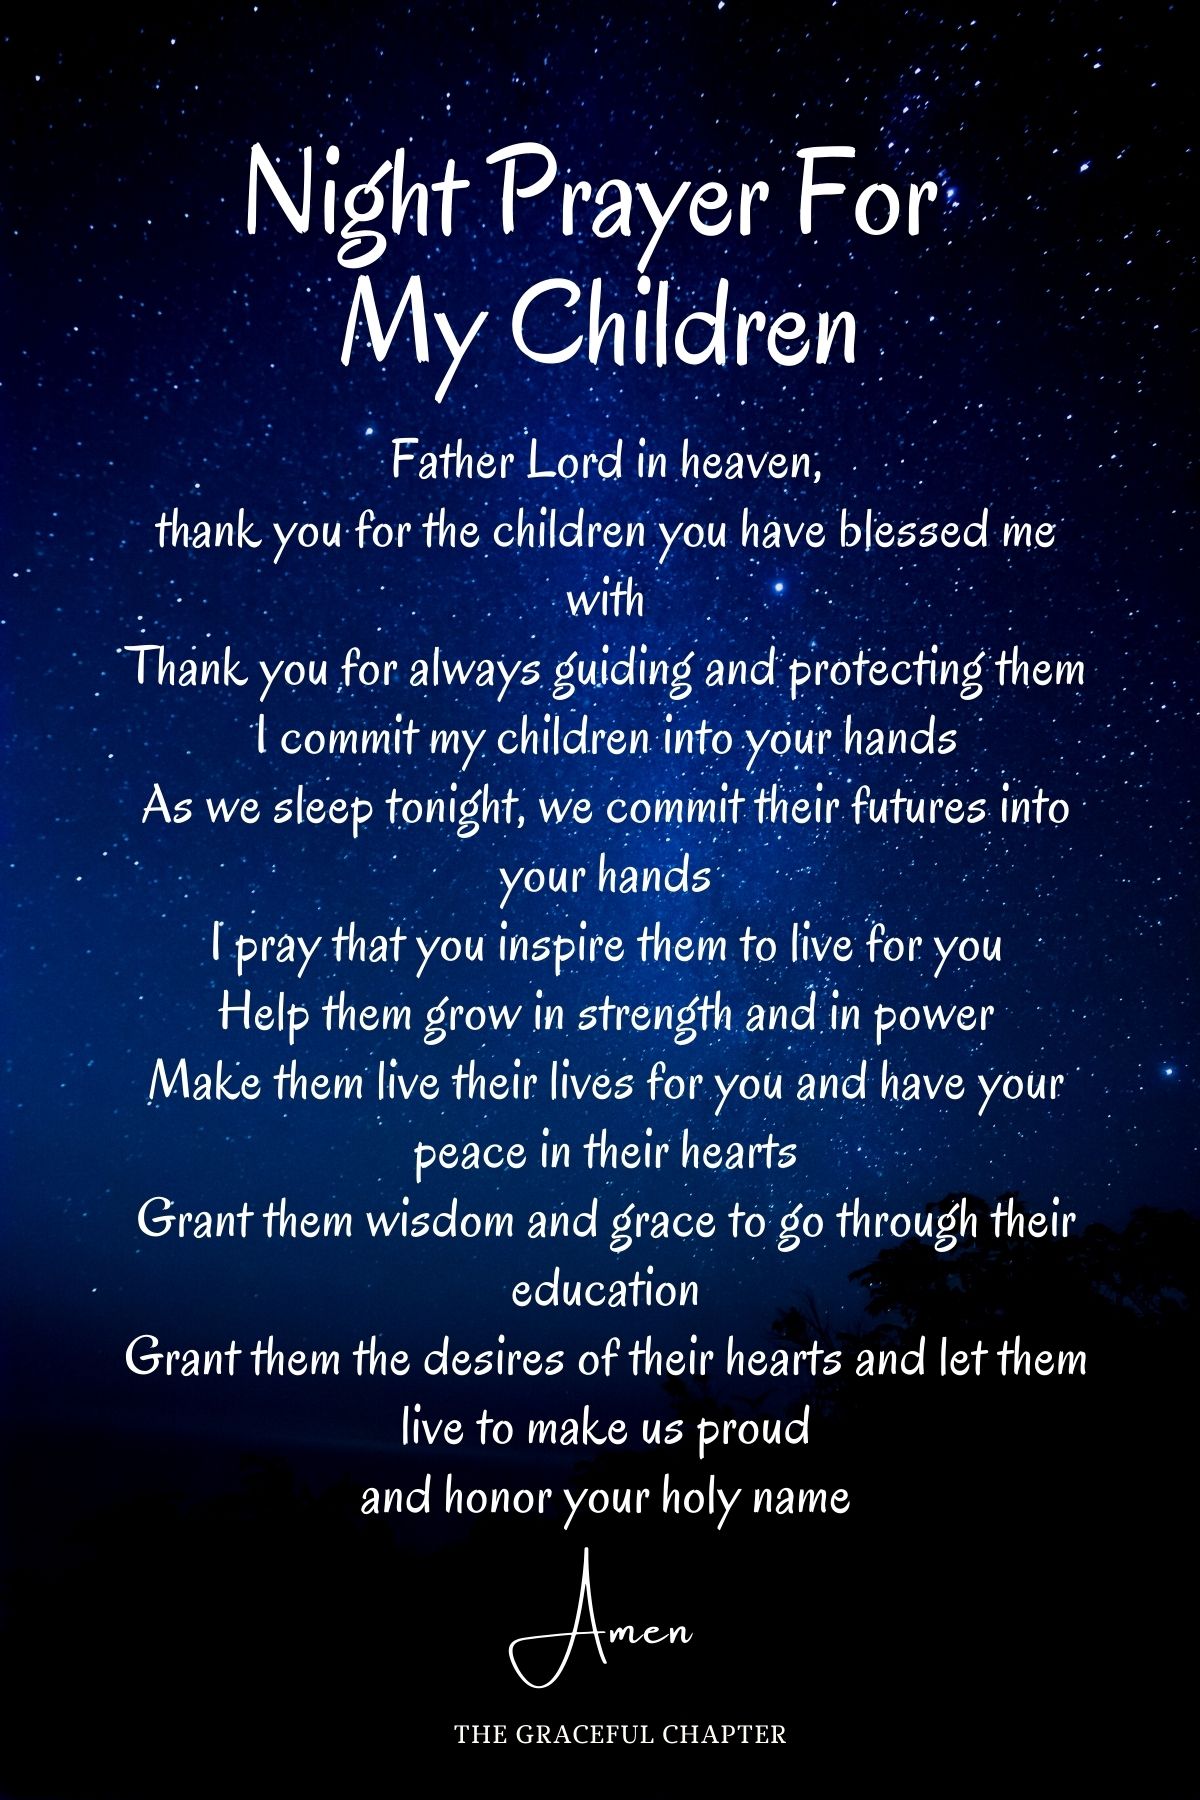 Night prayer for my children